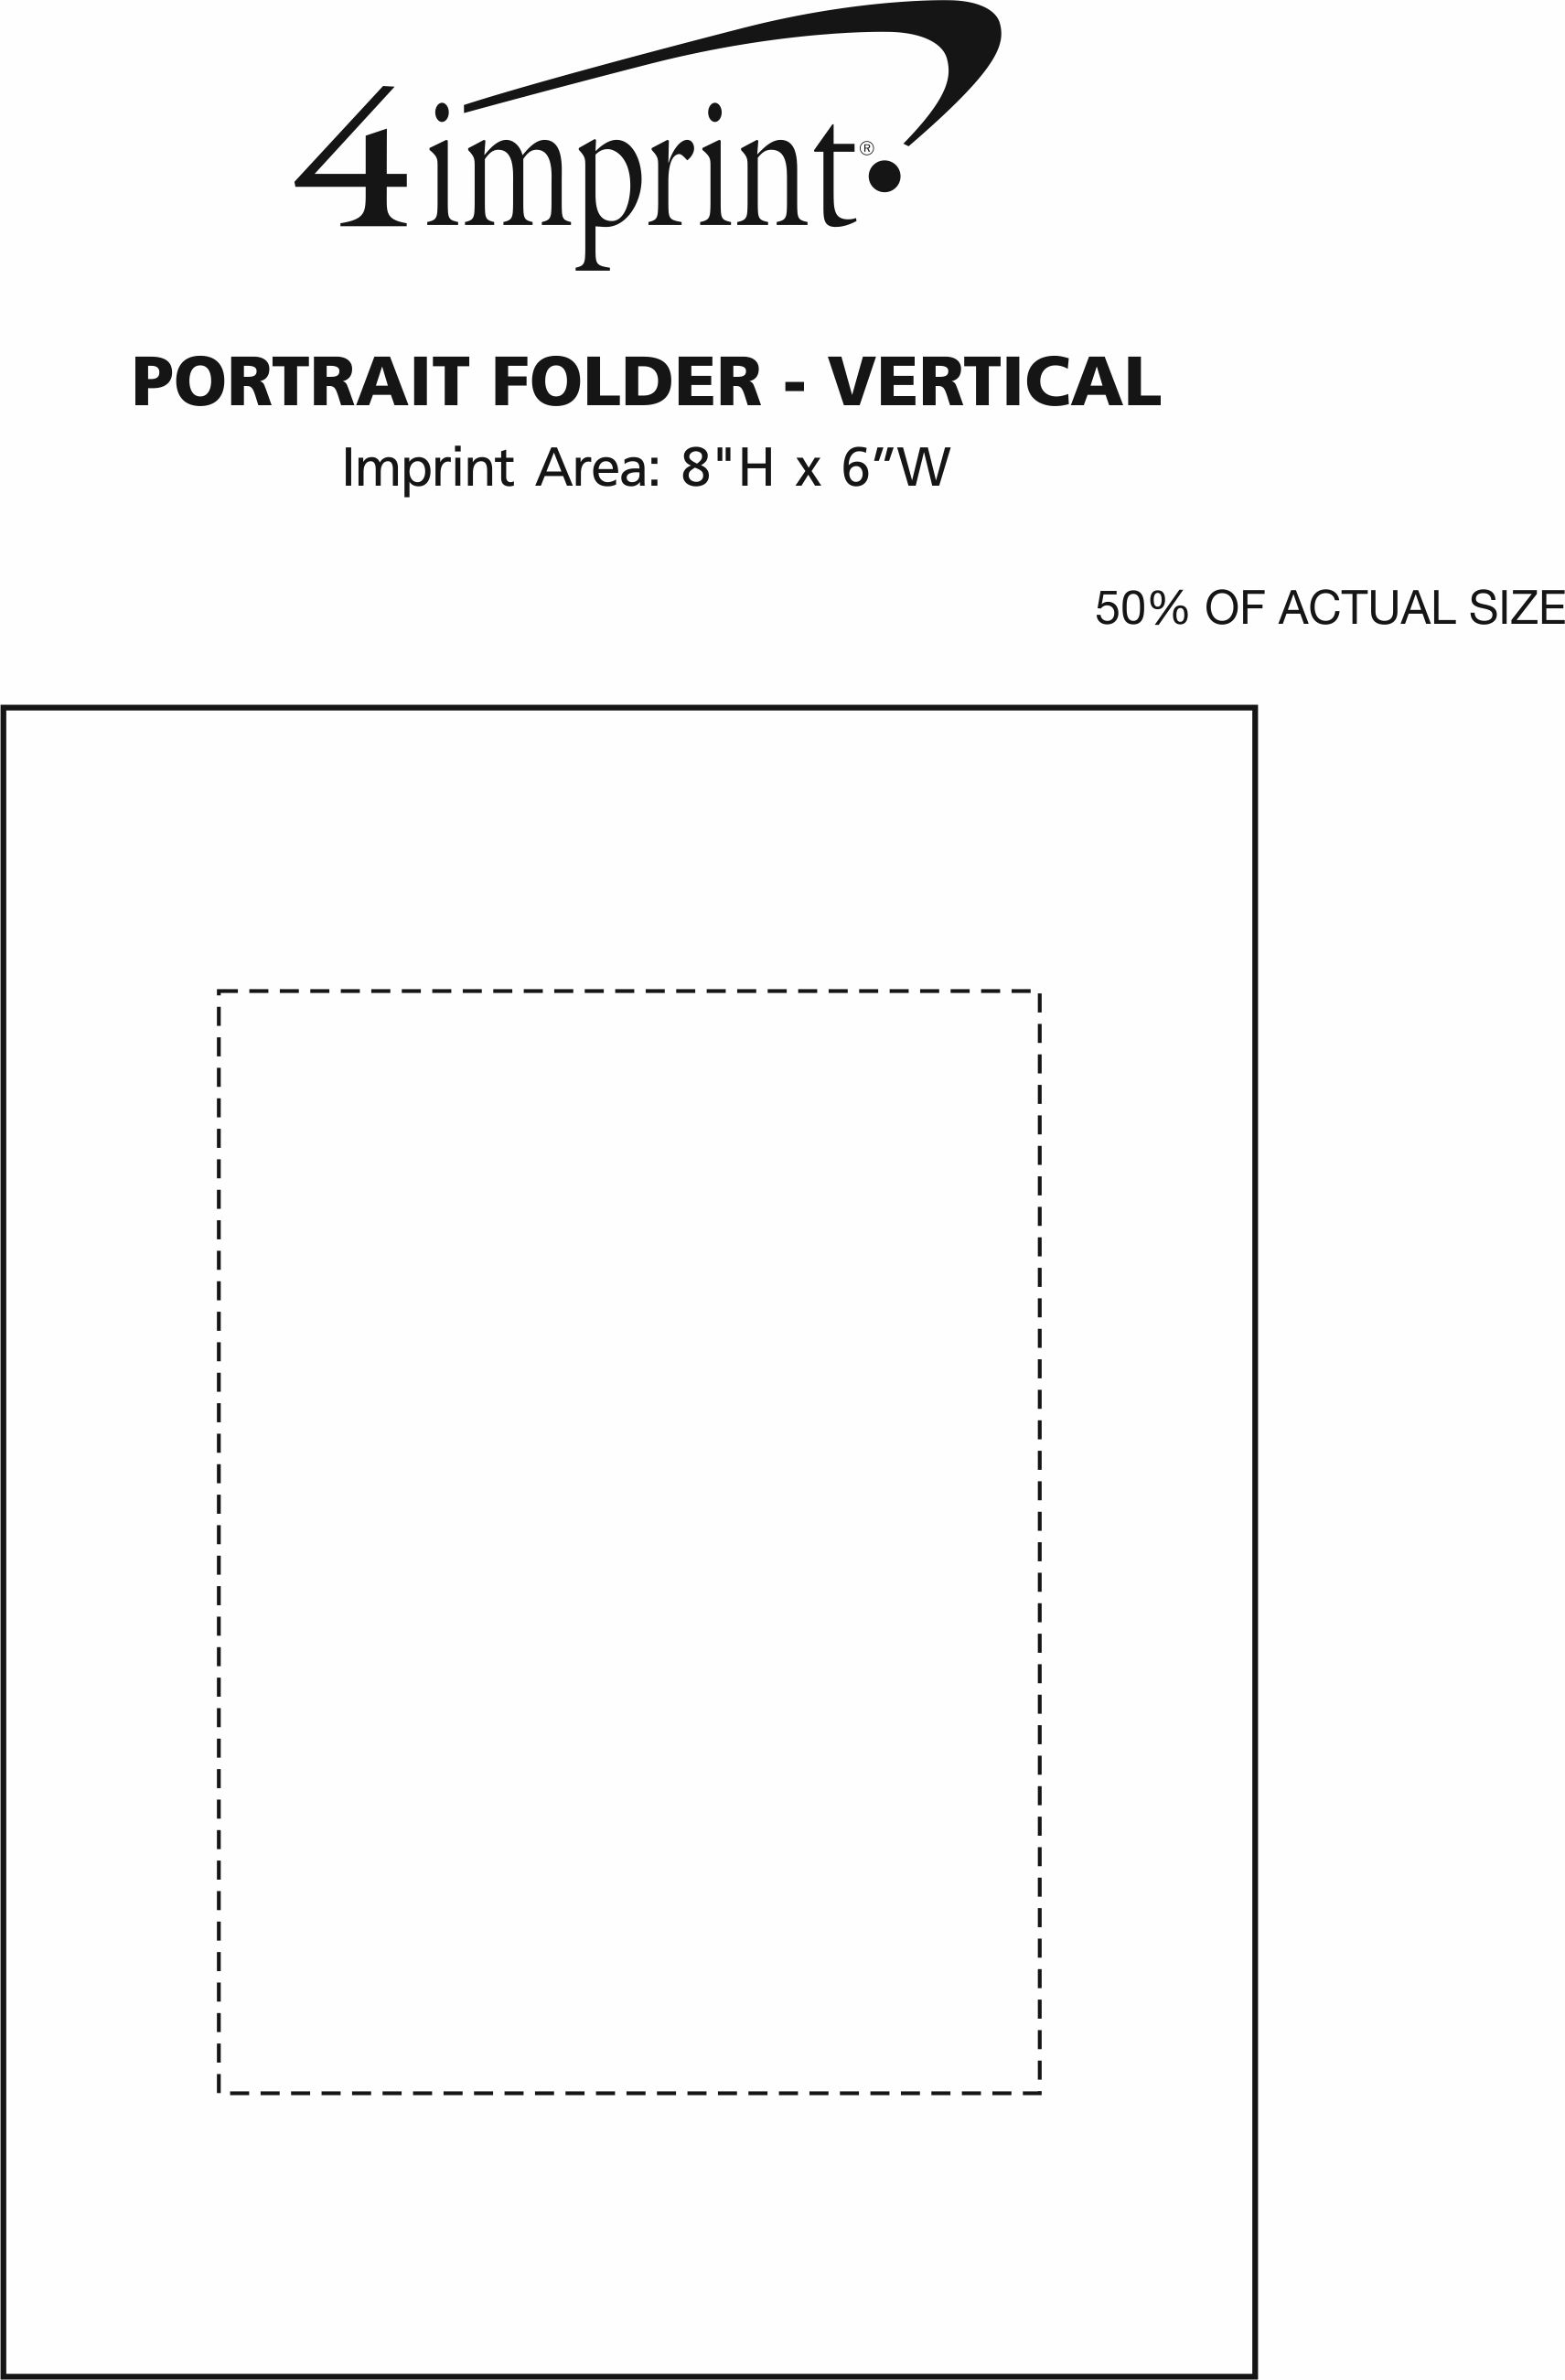 Imprint Area of 5" x 7" Portrait Folder - Vertical